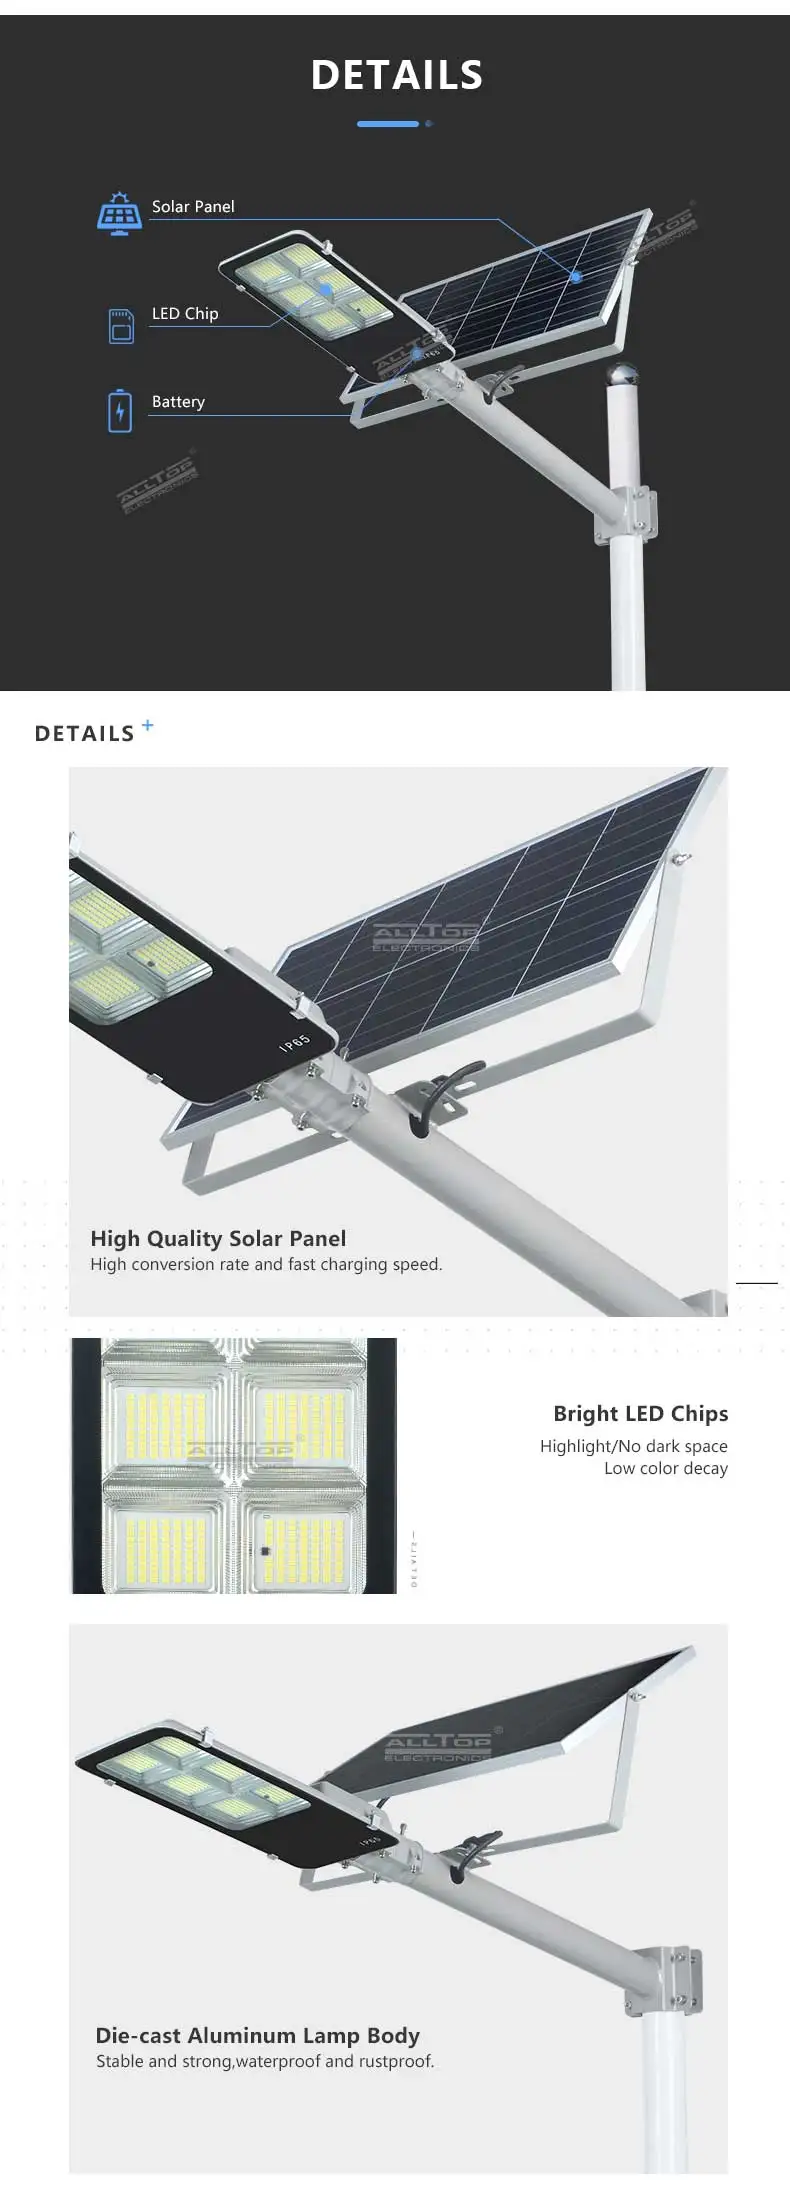 ALLTOP High lumen Bridgelux smd outdoor waterproof lighting IP65 150w integrated solar led street light